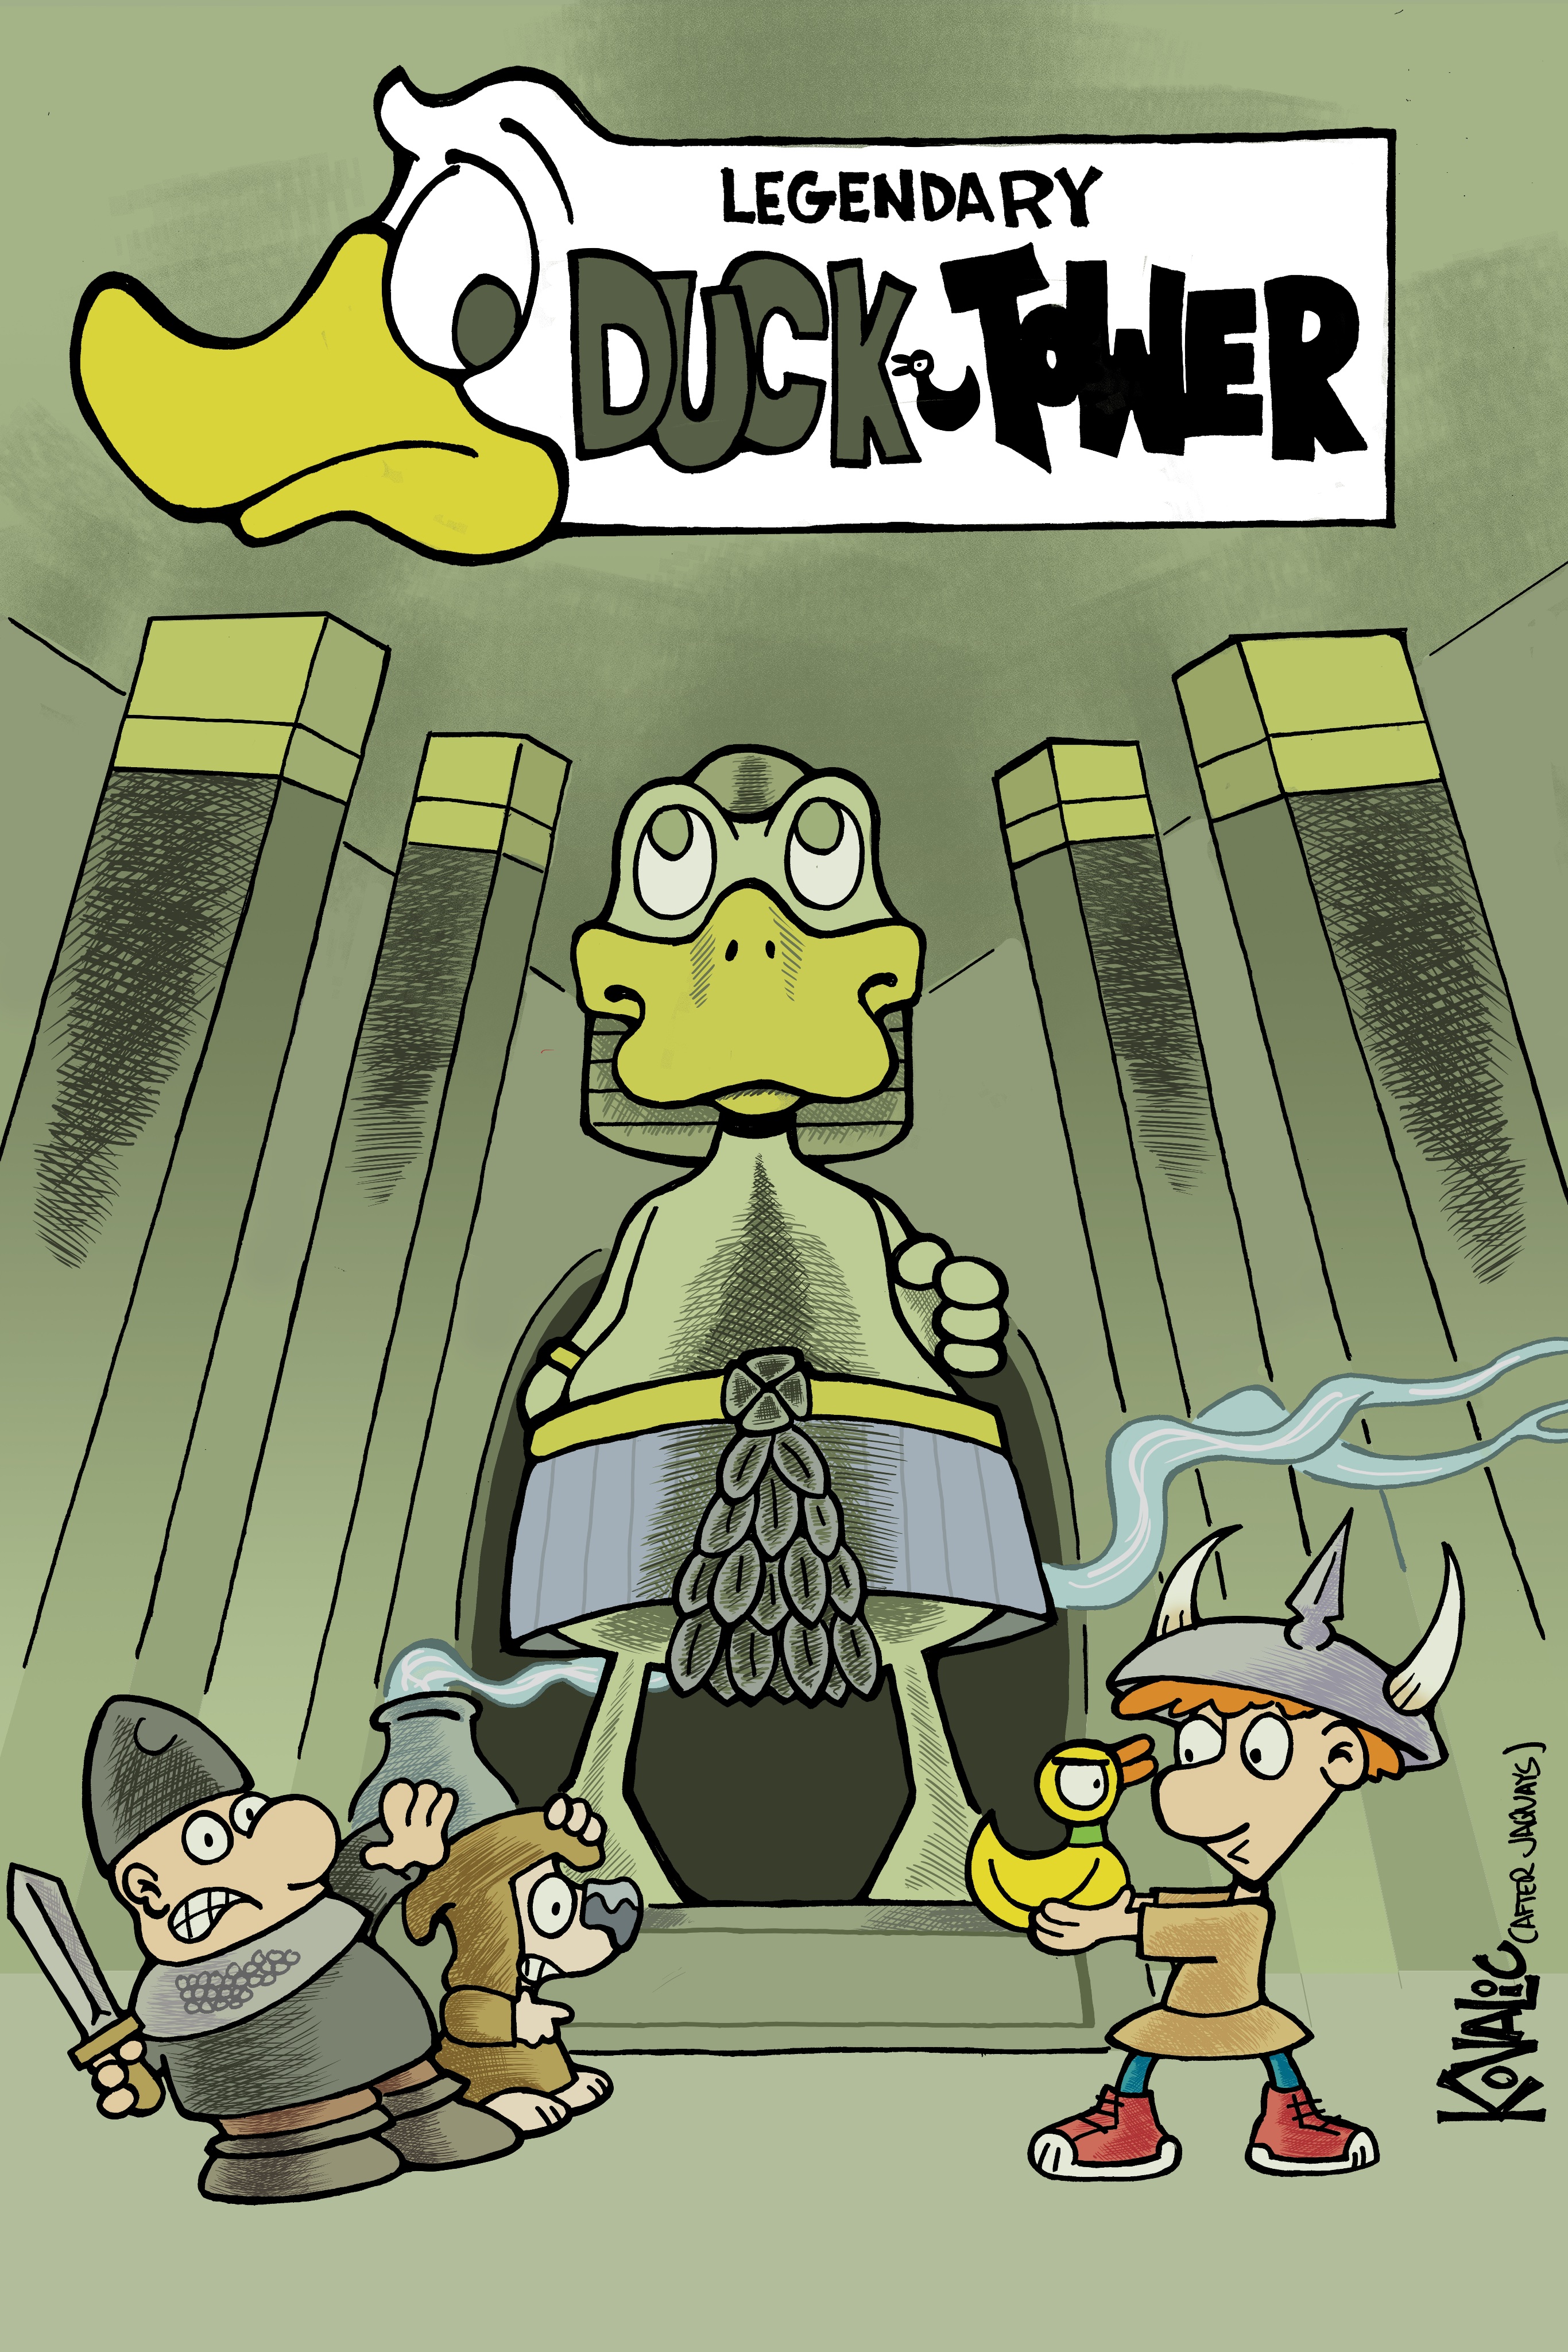 Legendary Duck Tower homage by John Kovalic